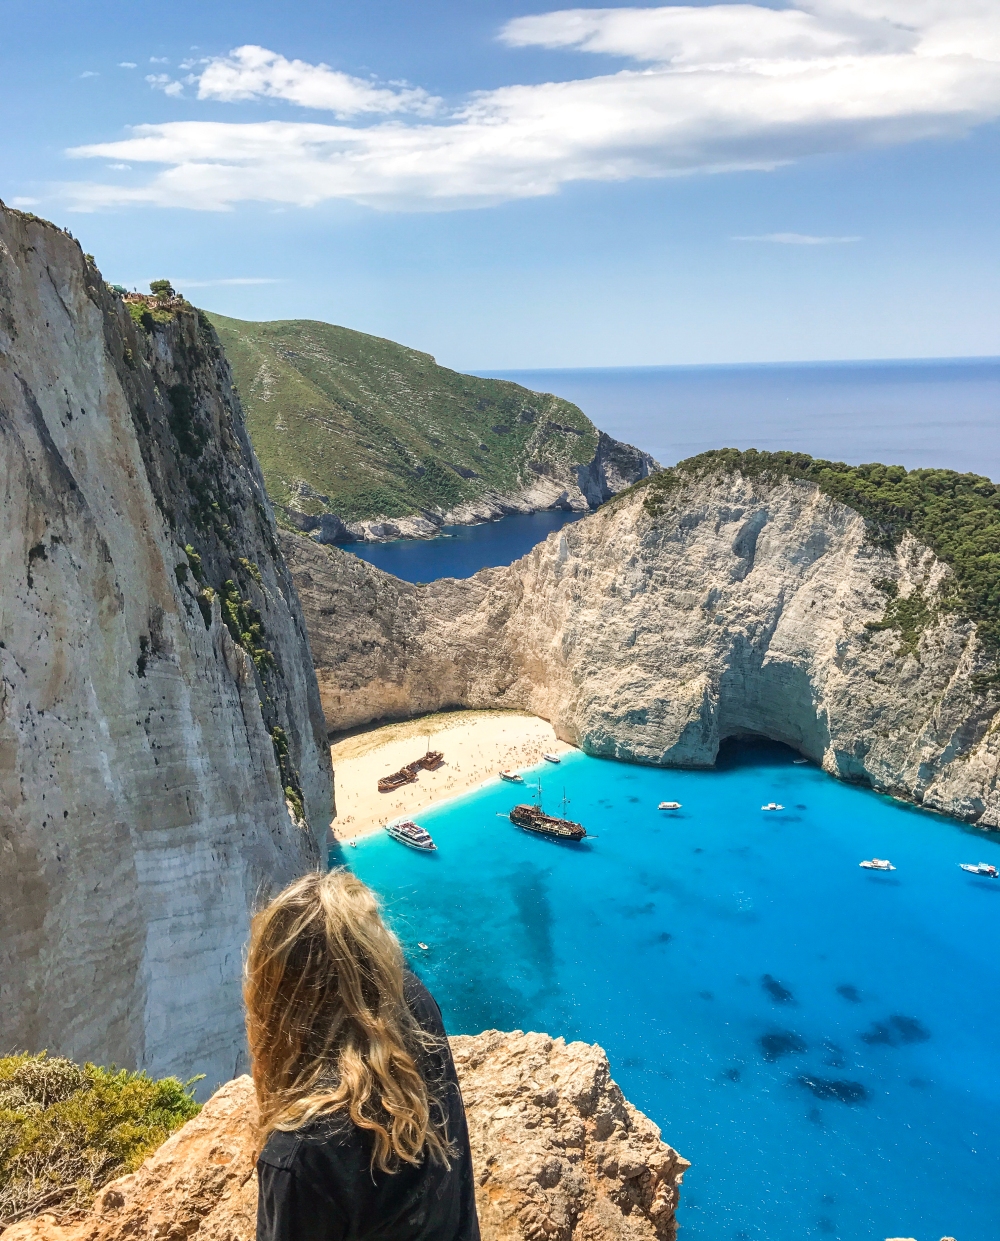 navagio beach, shipwreck beach, How to get there, Greek islands, Greece Travel, Zakynthos island